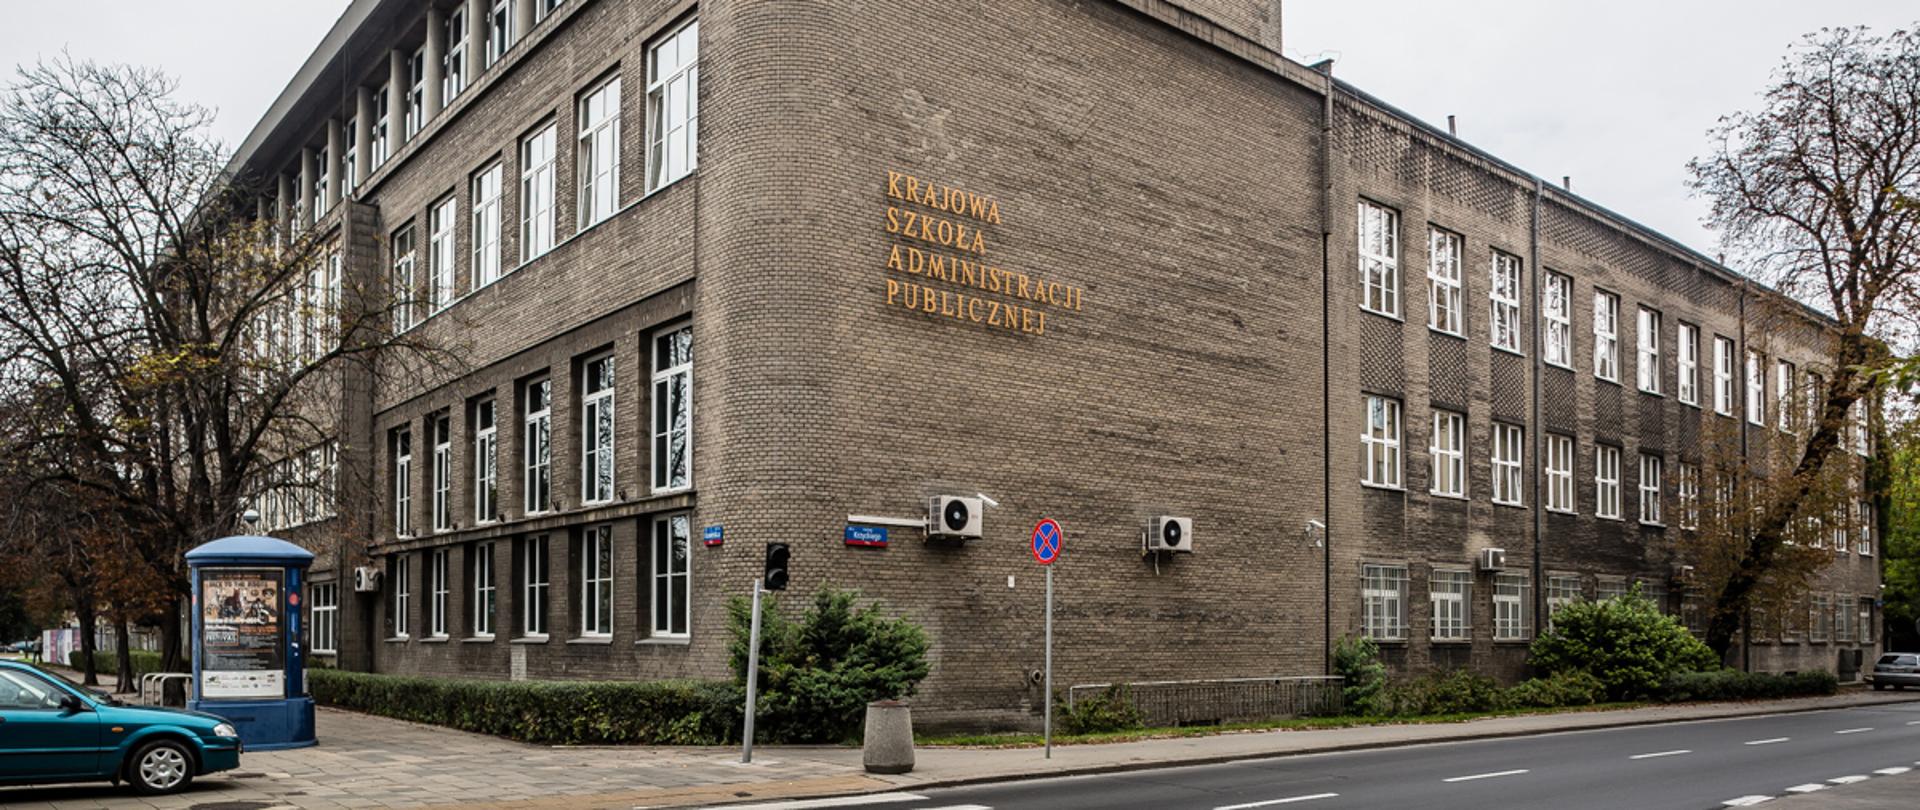 Lech Kaczyński National School of Public Administration building